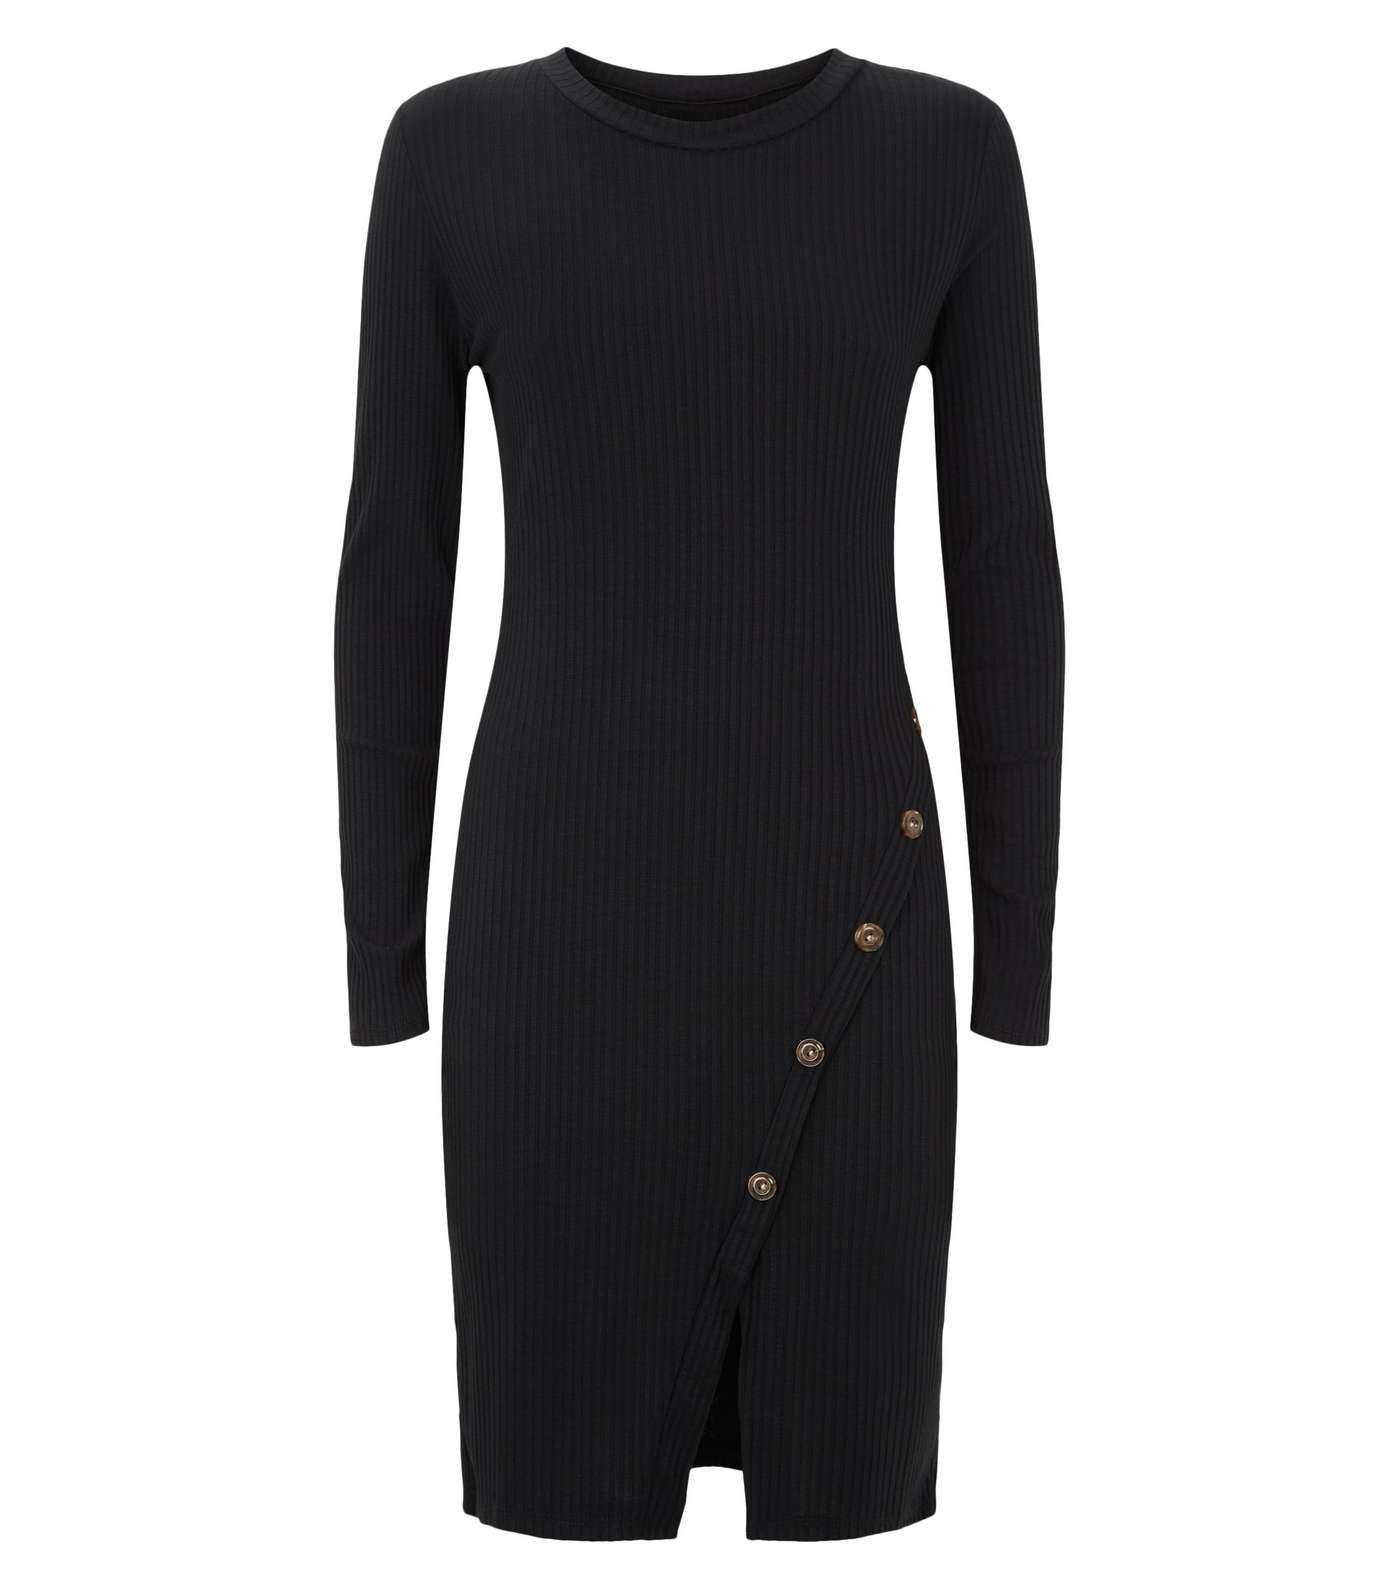 Mela Black Ribbed Long Sleeve Bodycon Dress Image 4